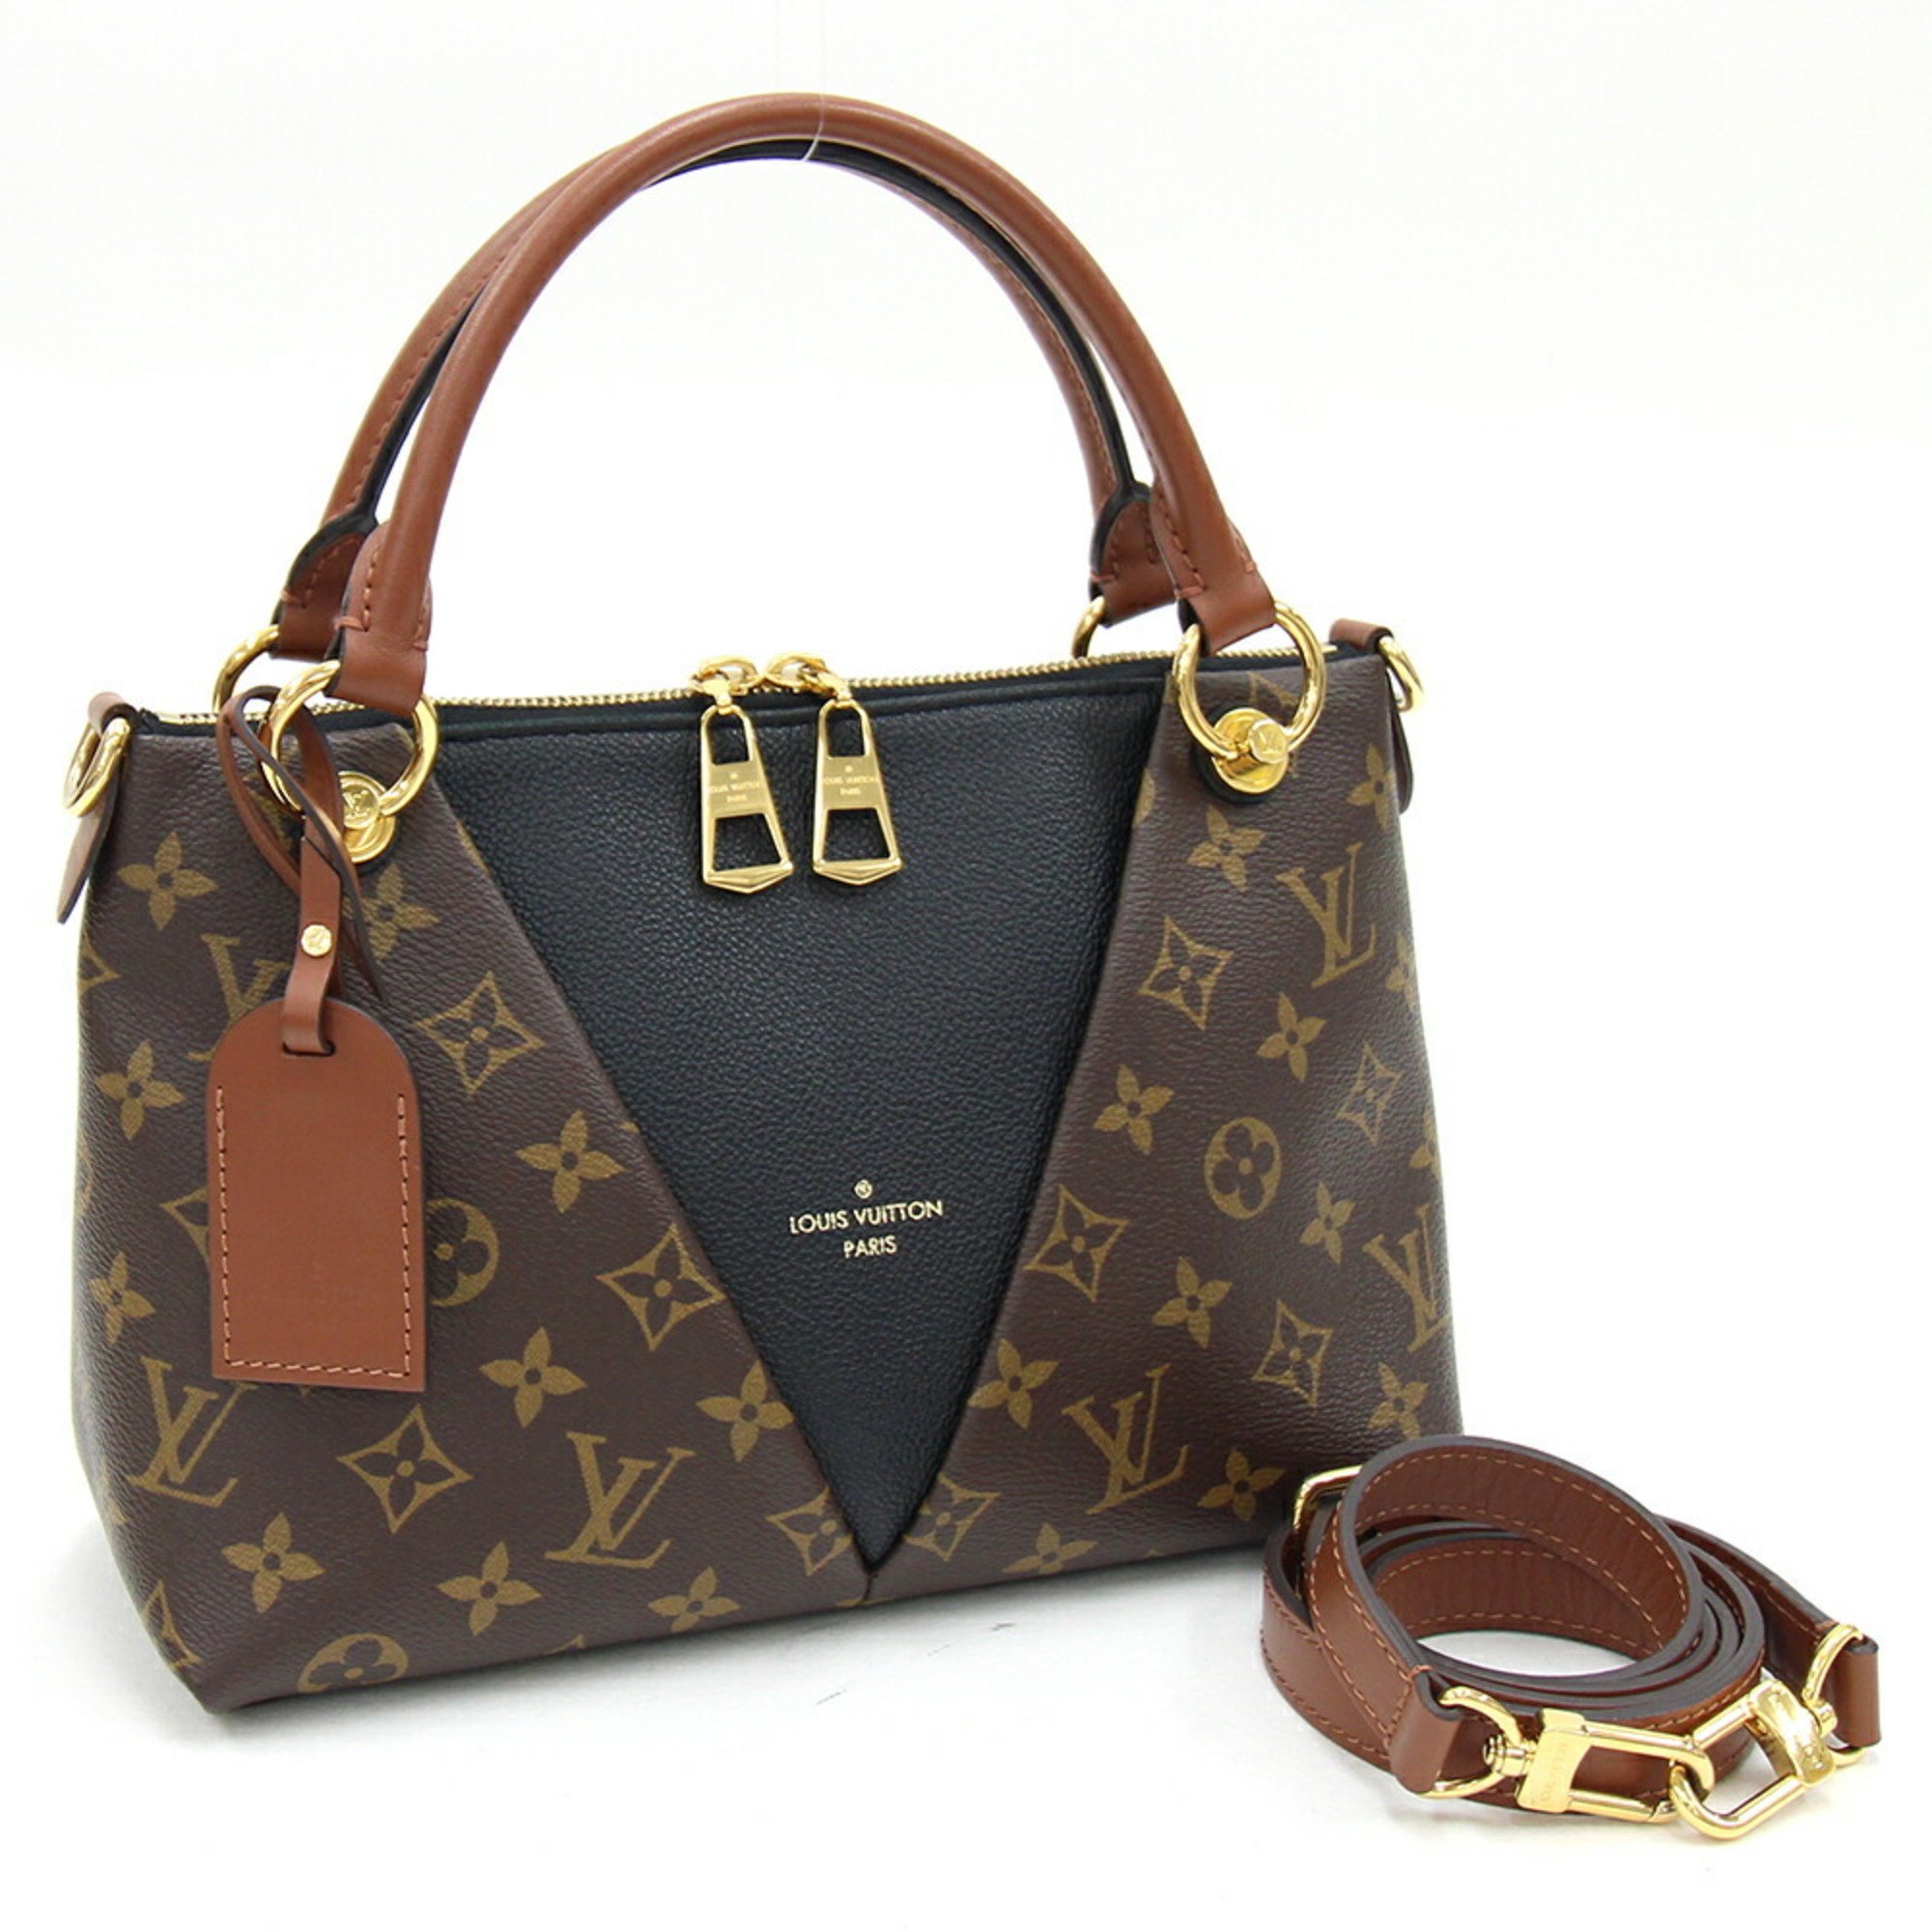 Louis Vuitton Handbag Monogram V Tote BB M43976 Noir Shoulder Bag Grain Calfskin Women's LOUIS VUITTON